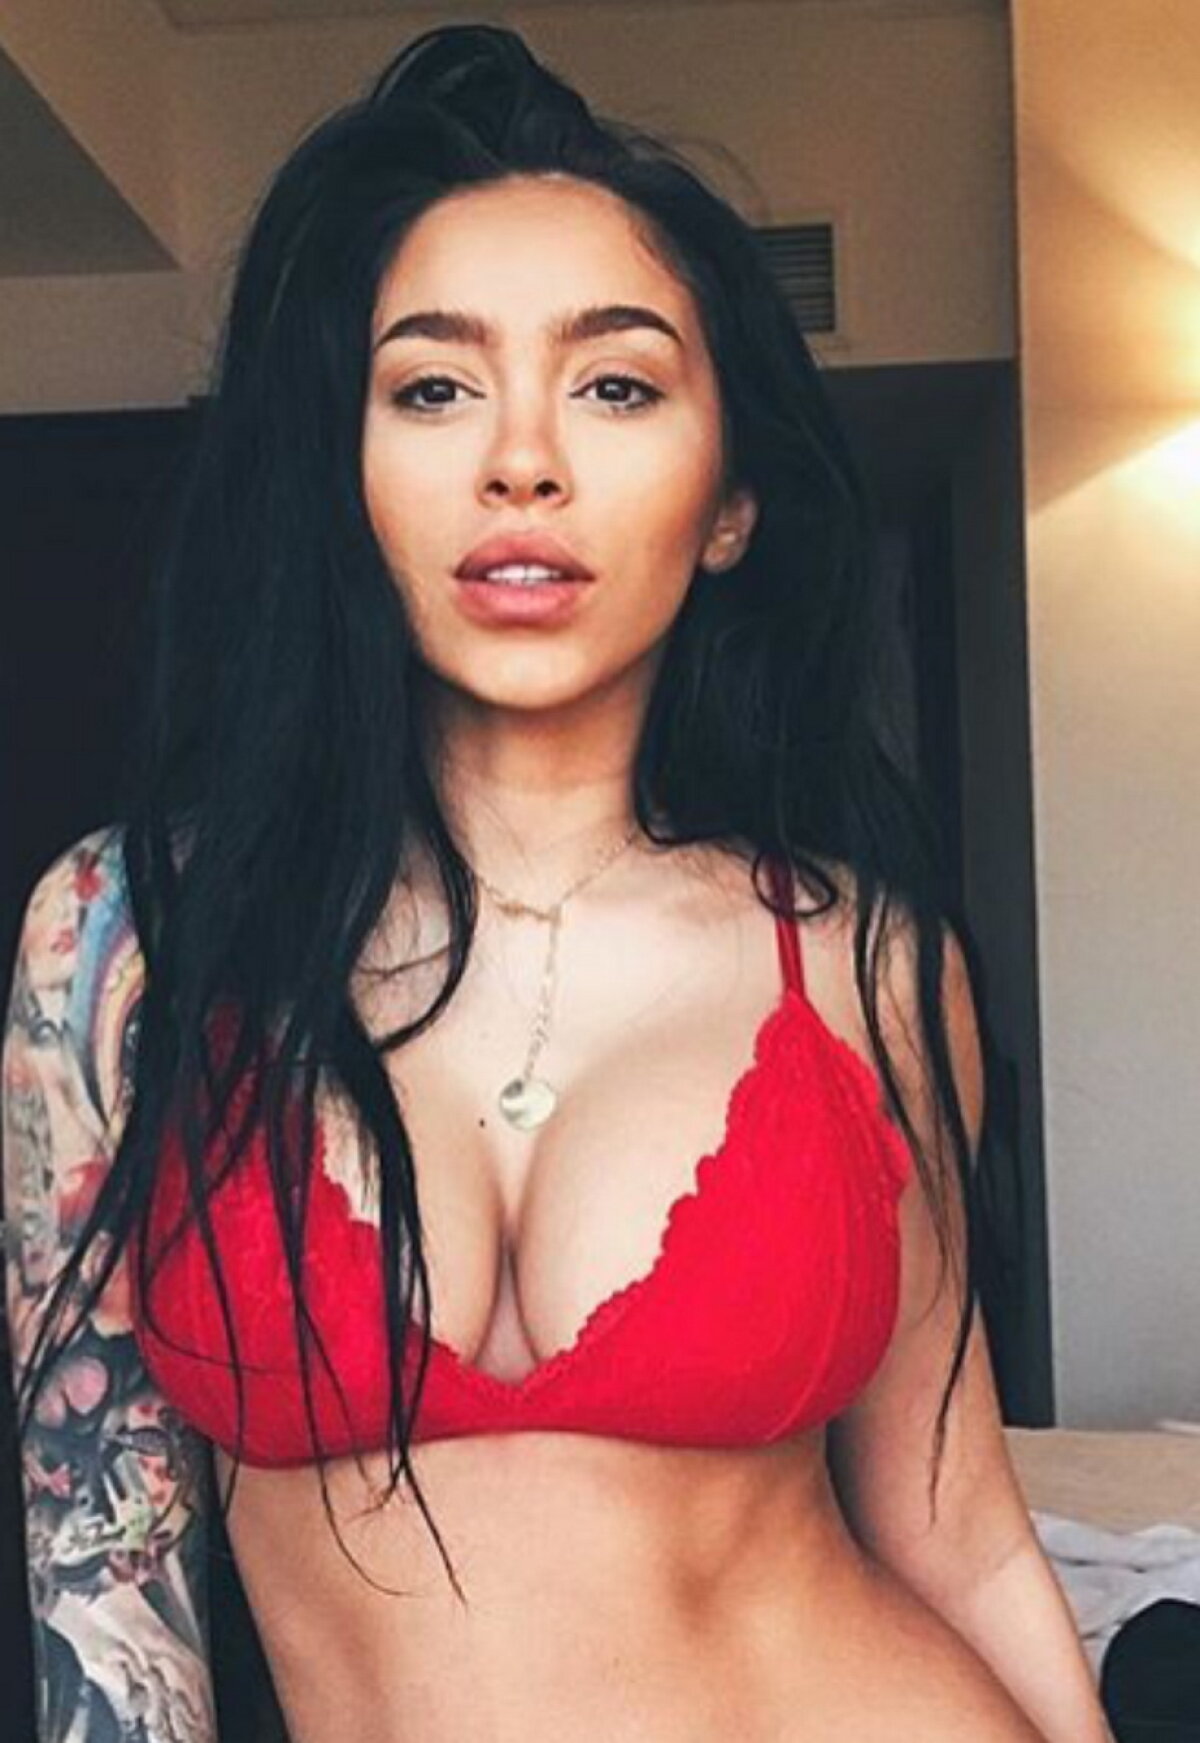 FOTO Ruby, fotografii ilegal de sexy pe Instagram